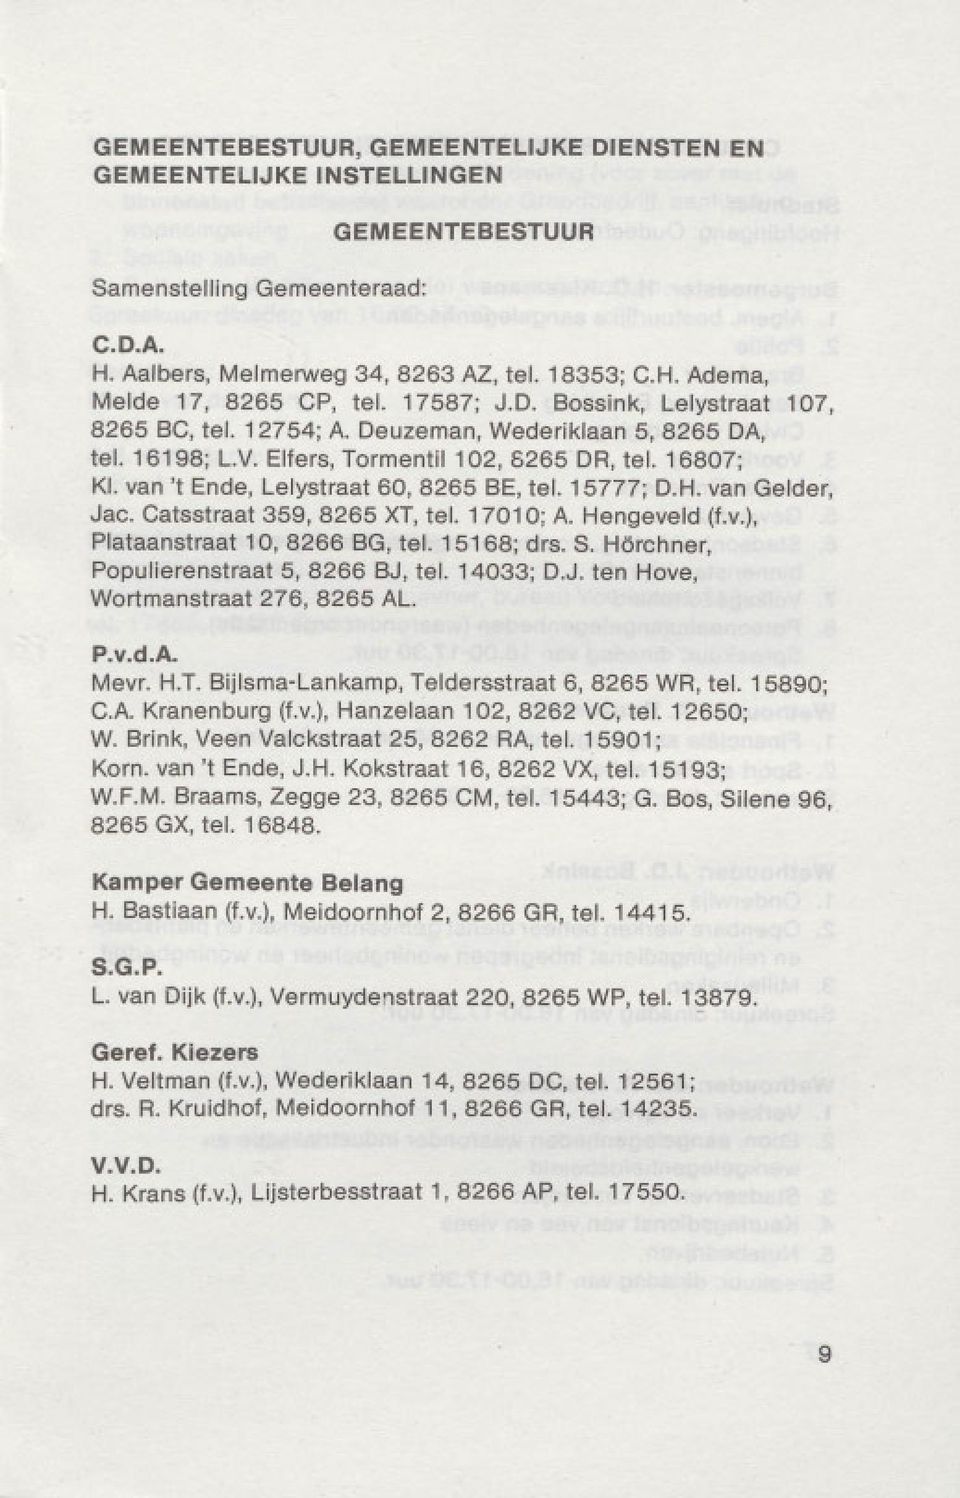 15777; D.H. van Gelder, Jac. Catsstraat 359, 8265 XT, tel. 17010; A. Hengeveld (f.v.), Plataanstraat 10,8266 BG, tel. 15168; drs. S. Horchner, Populierenstraat 5, 8266 BJ, tel. 14033; D.J. ten Hove, Wortmanstraat 276, 8265 AL.